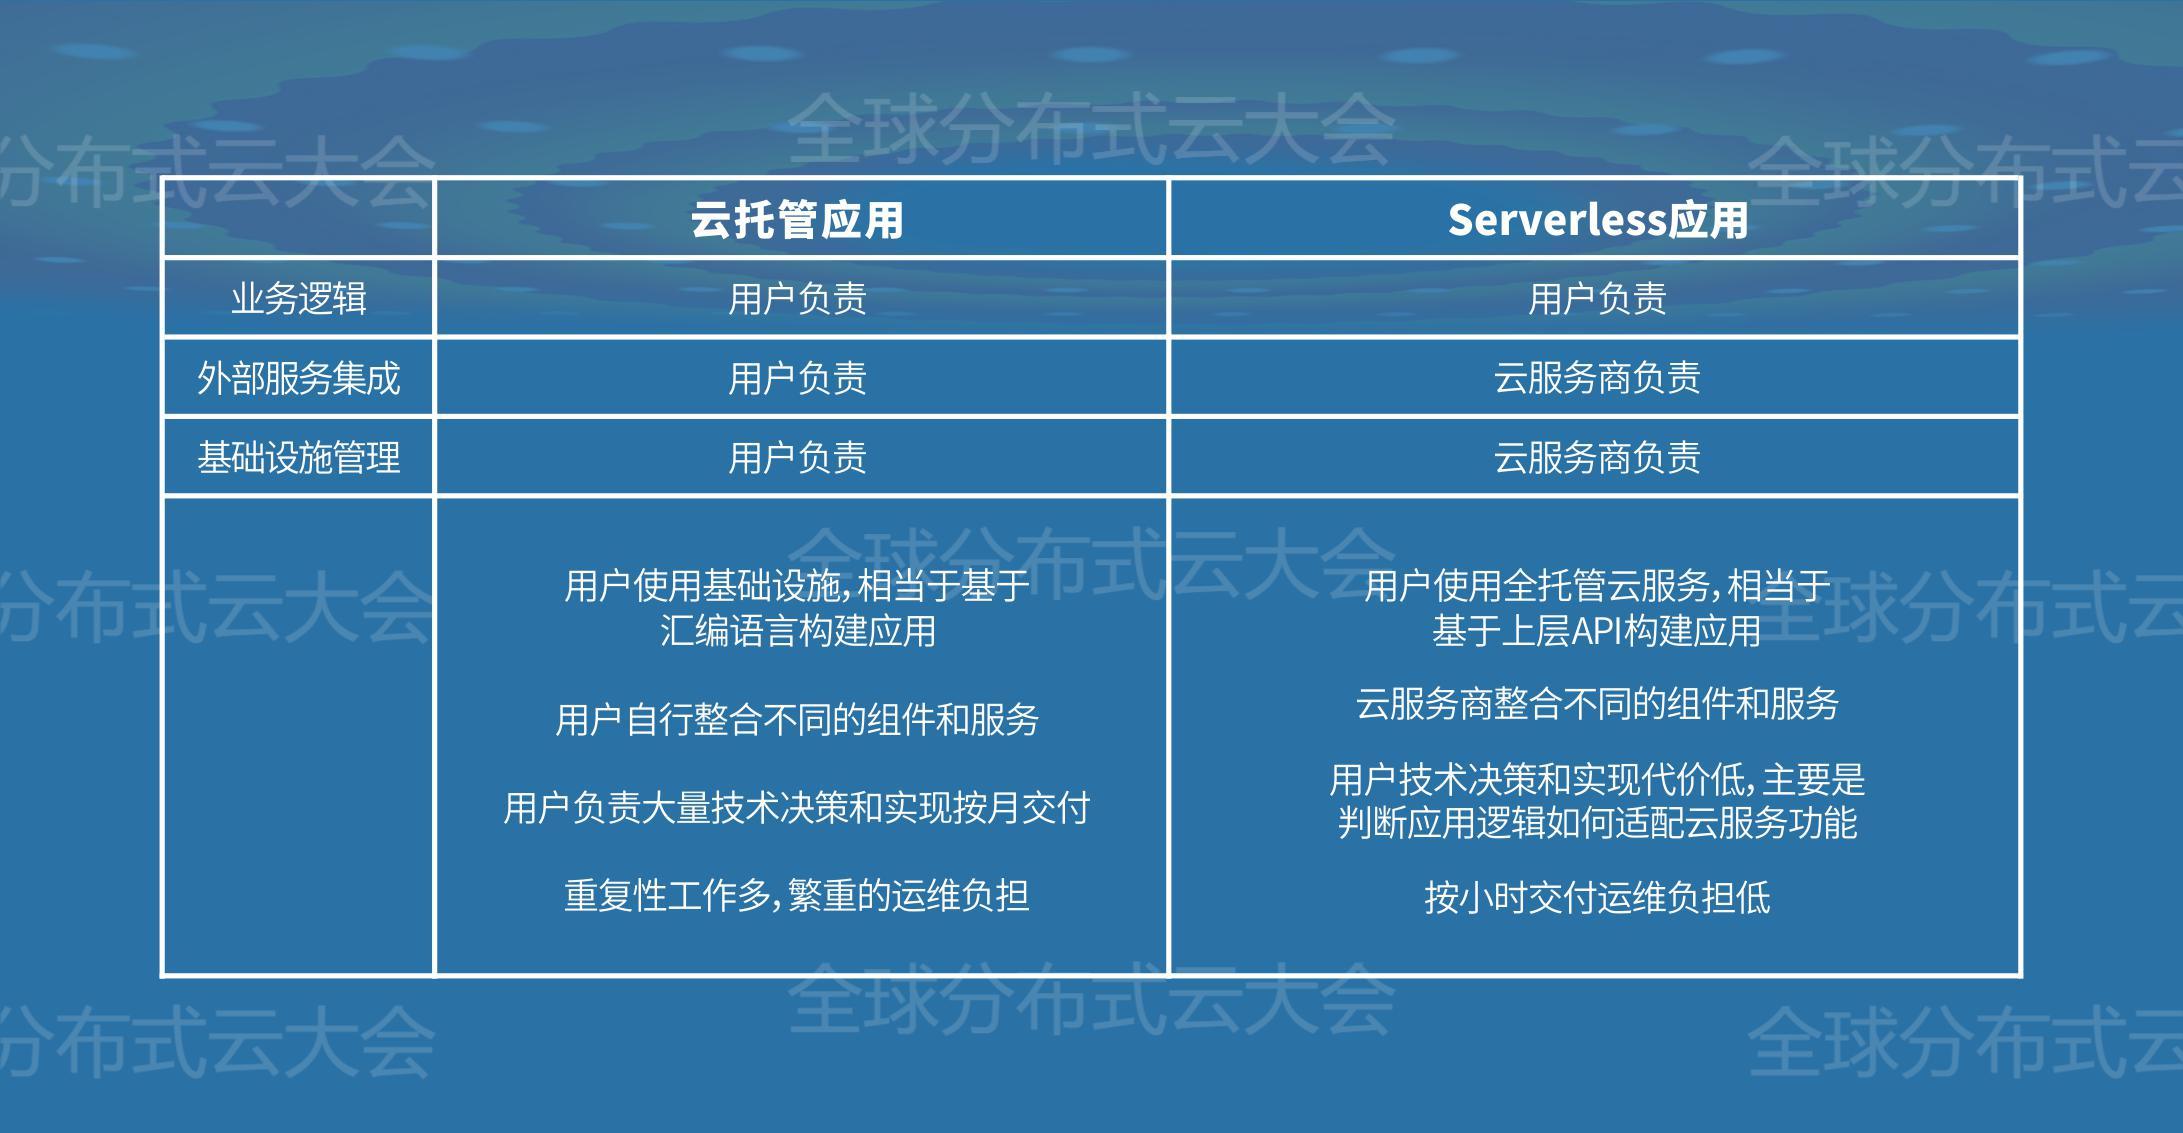 Serverless图谱：阿里云腾讯云华为云AWS都在发力「无服务器架构」